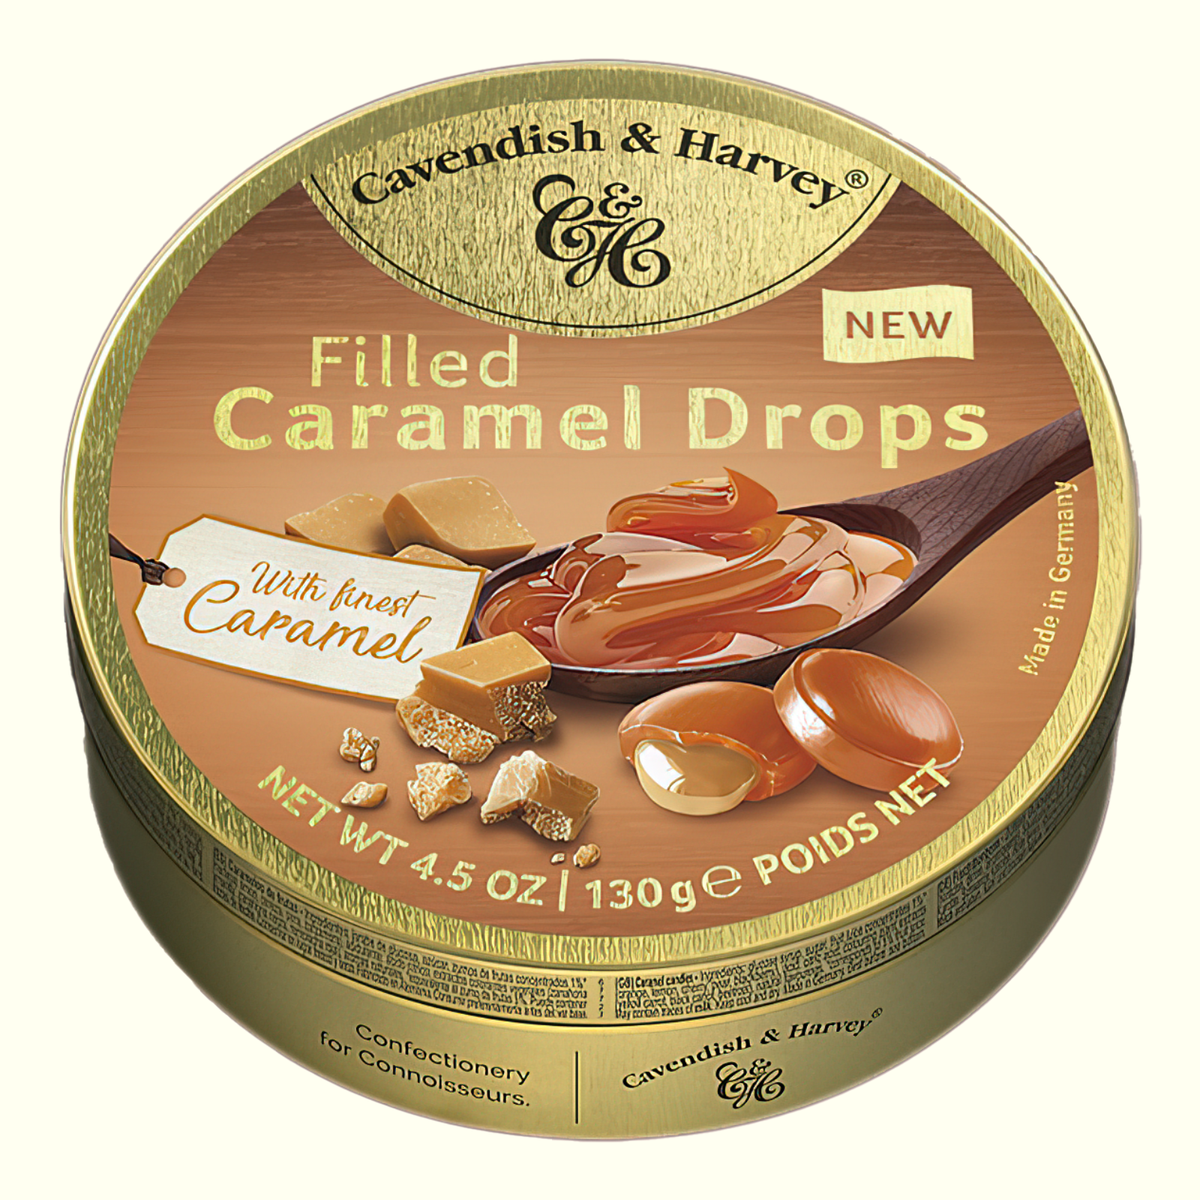 Cavendish & Harvey Filled Caramel Drops With Finest Caramel 130g